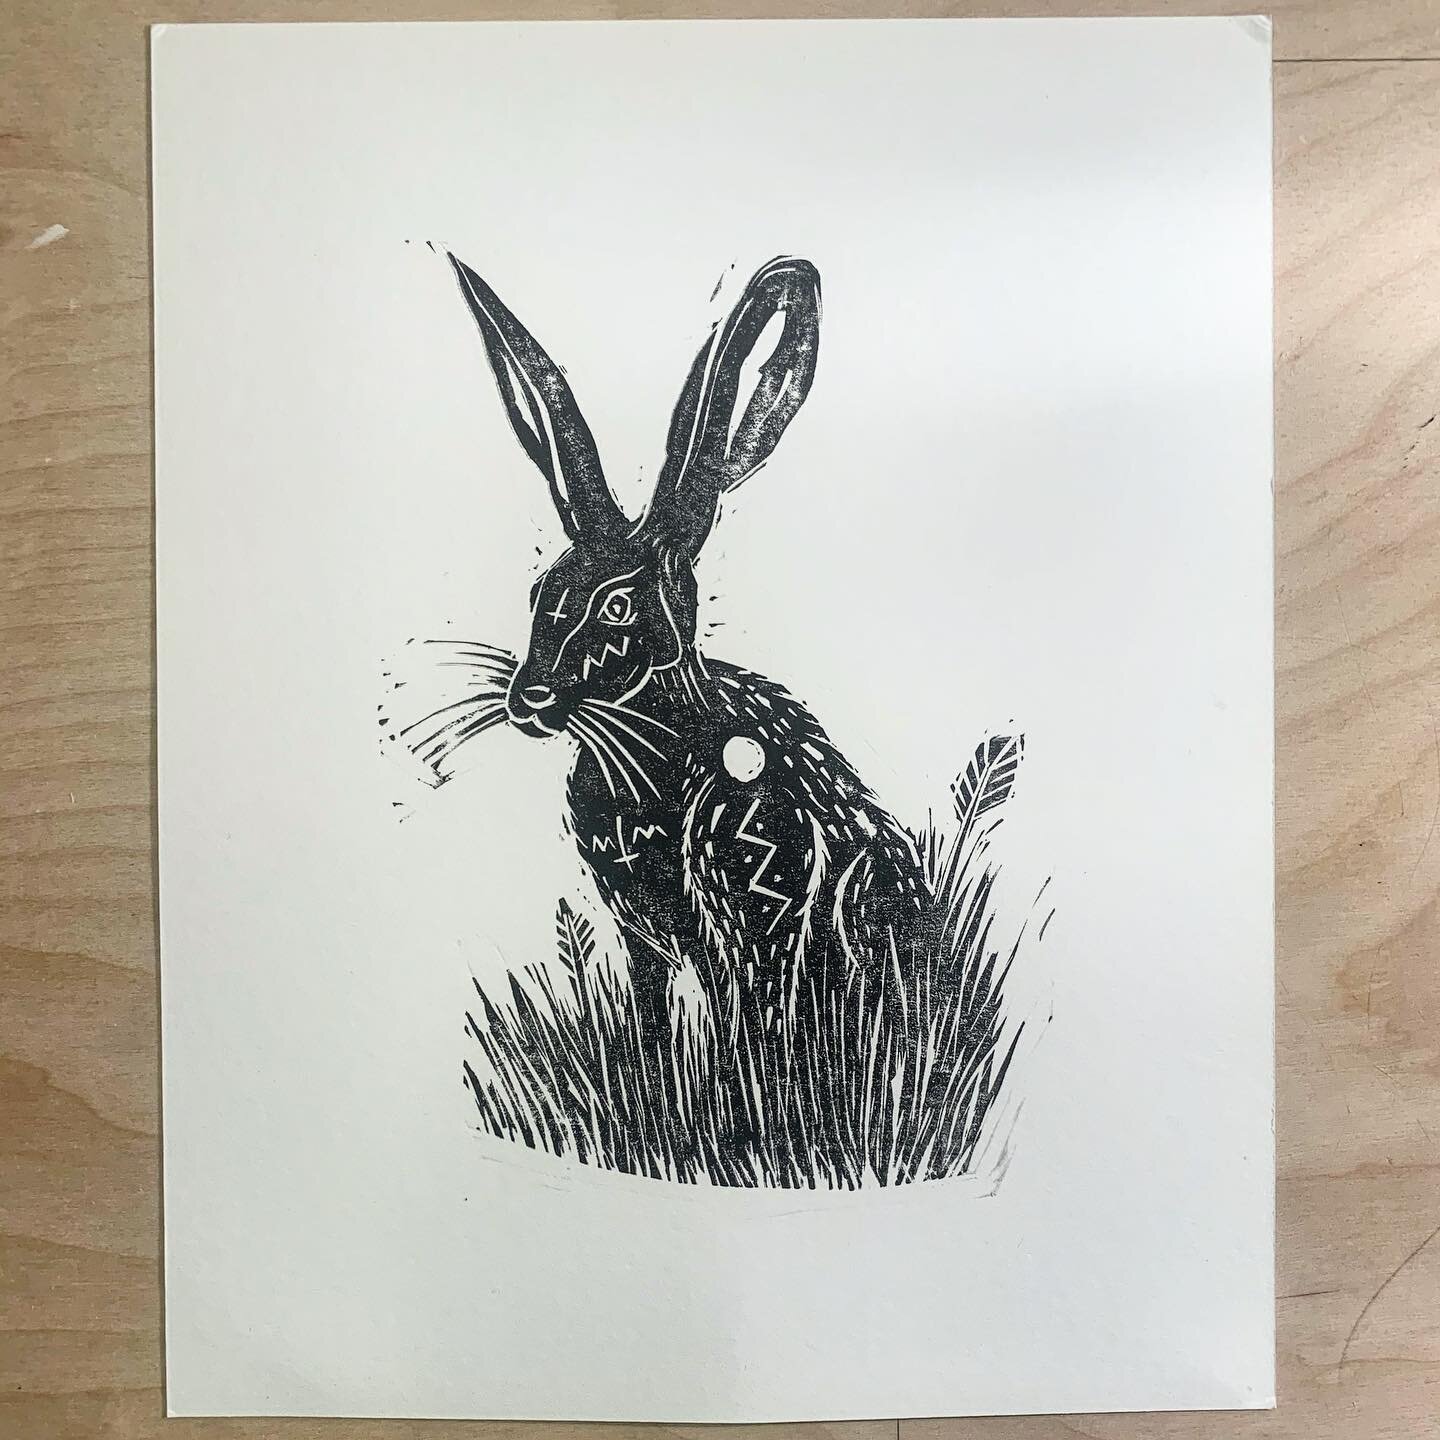 Printed the Hare today. 
-
-
-
-
-
-
#printmaking #reliefprint #reliefprintmaking #procreate #illustration  #art #blackandwhite #blackandwhiteartworking #homeprinting #linocut #lino #linocutprint #printmaker #printmakersofinstagram #tattoo #dark #bnw